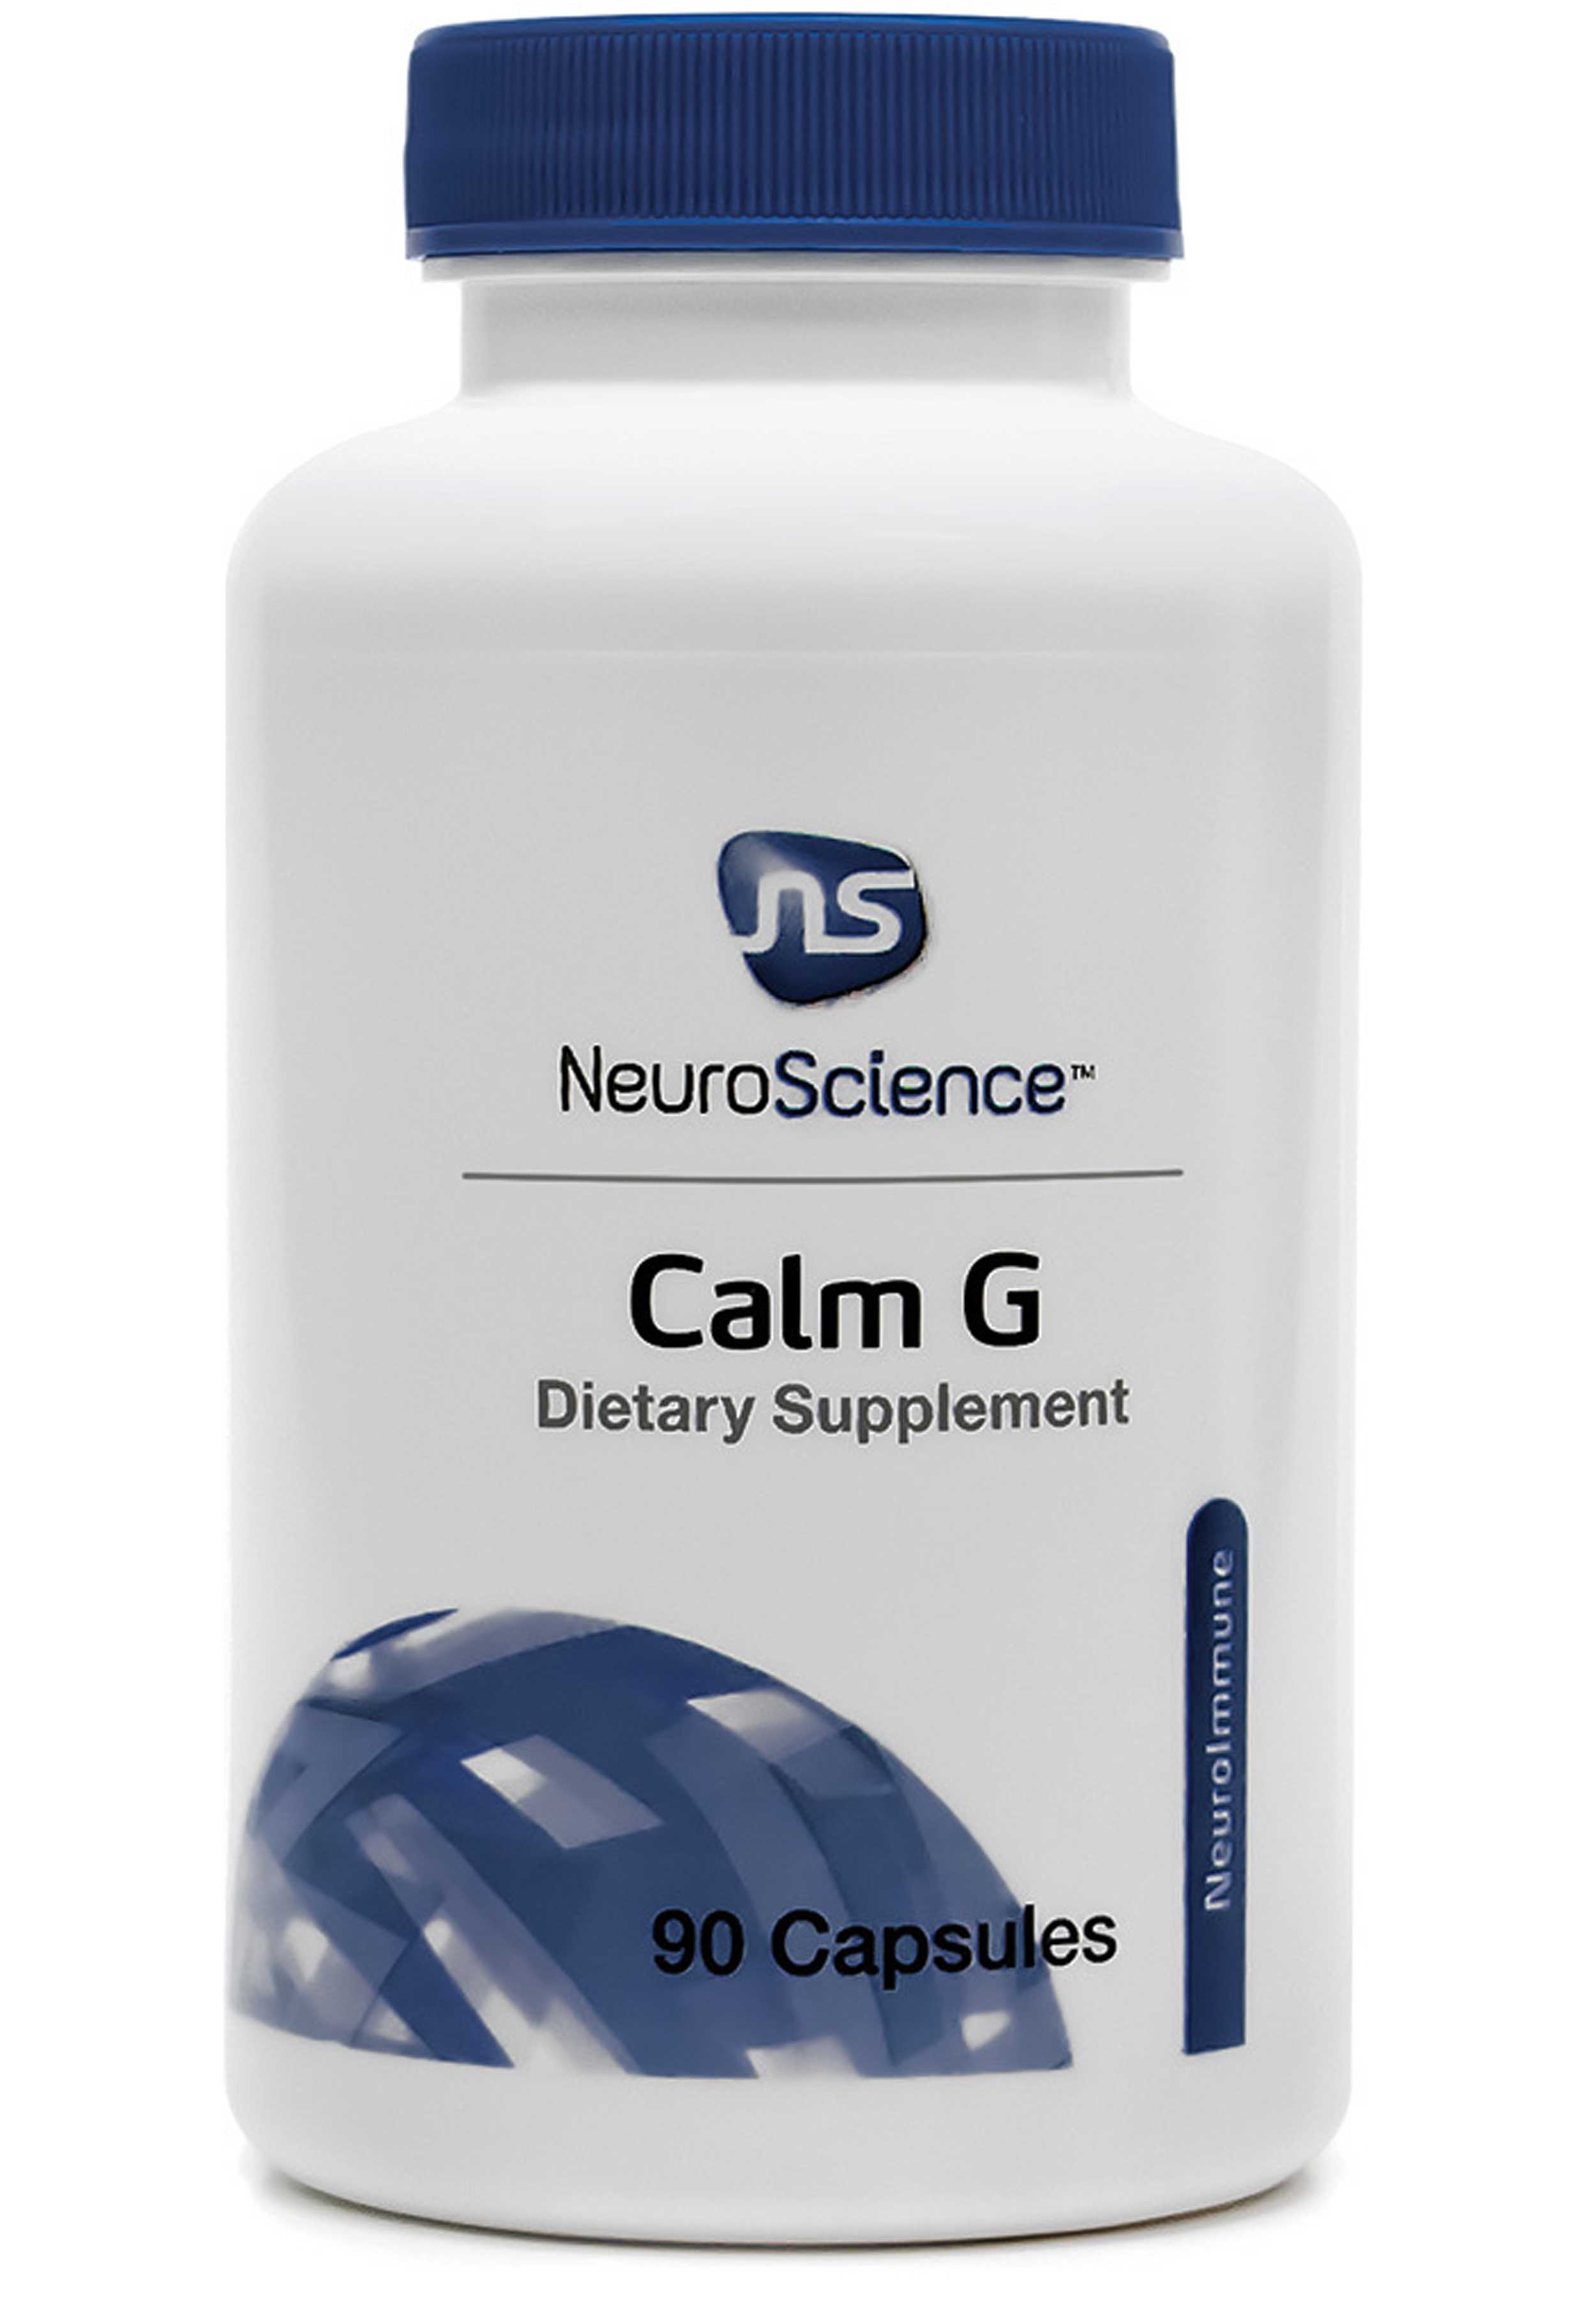 NeuroScience Calm G